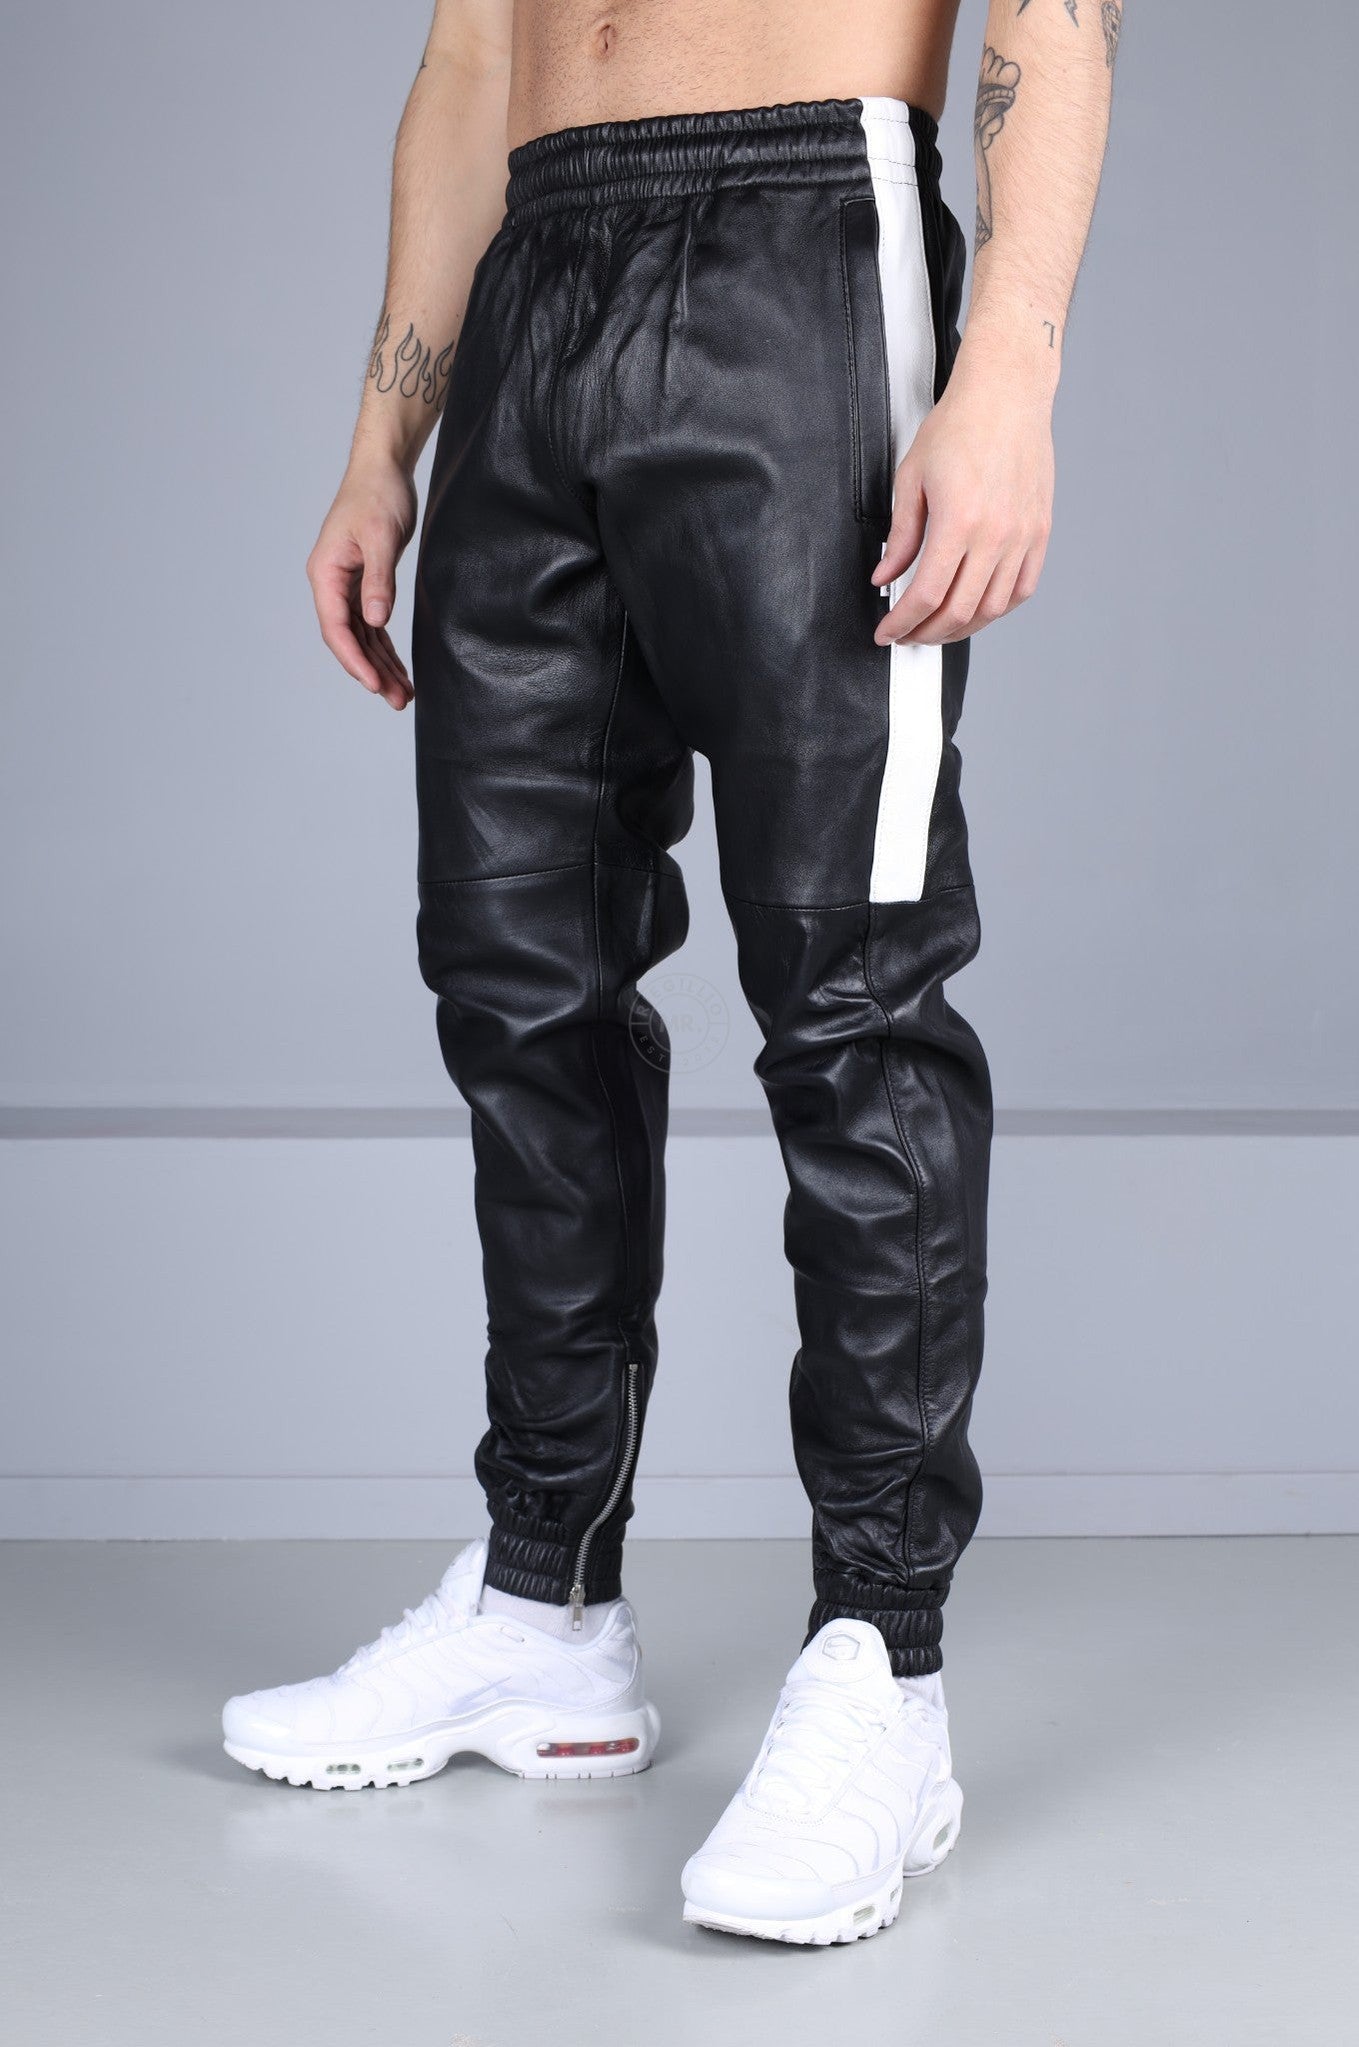 Black Leather Tracksuit Pants - White Stripe at MR. Riegillio